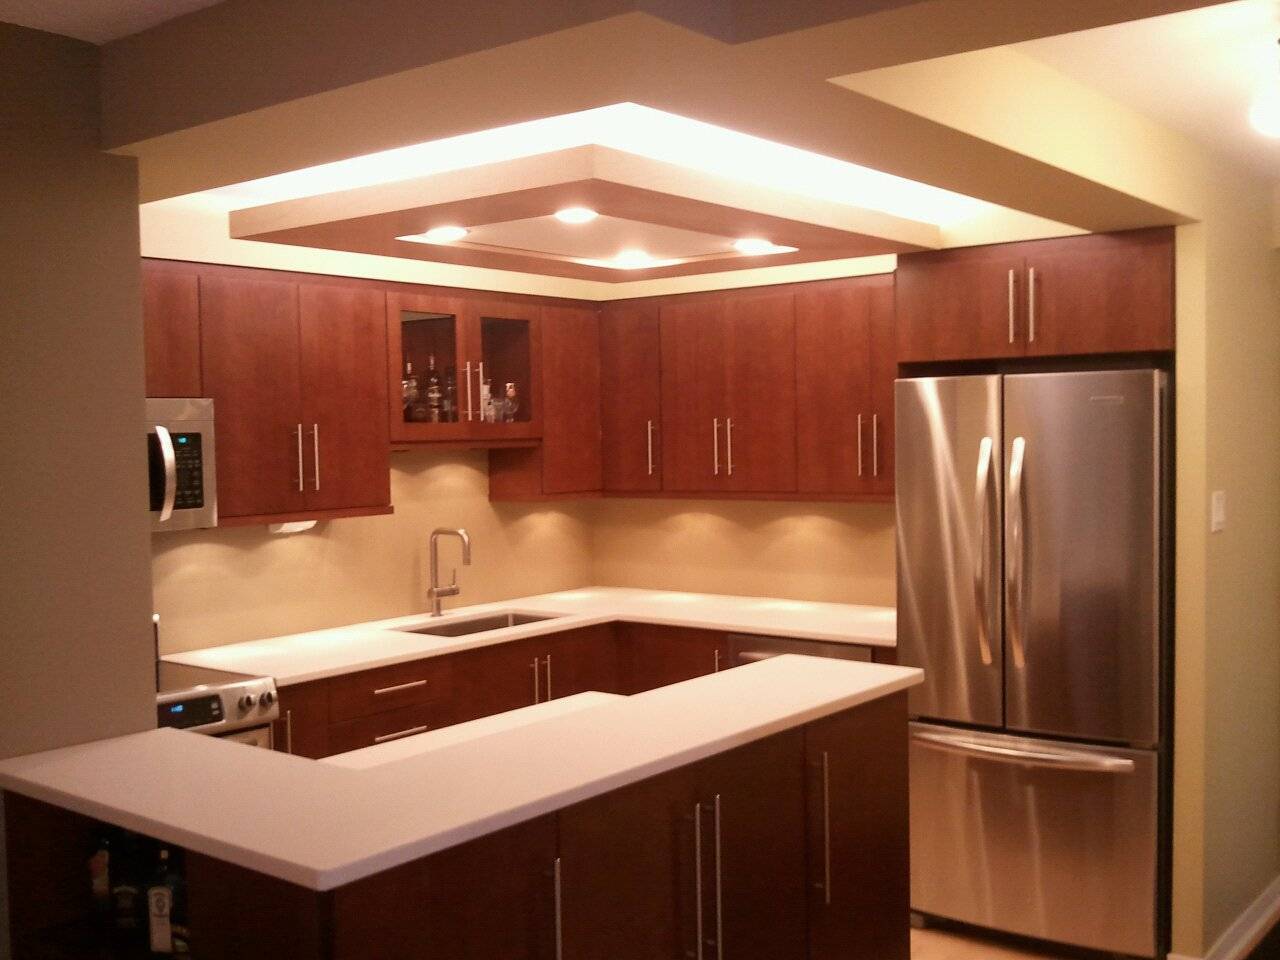 Потолок из гипсокартона на кухне: преимущества и недостатки гипсокартона. лучшие идеи дизайна потолка на кухне с фото-обзорами